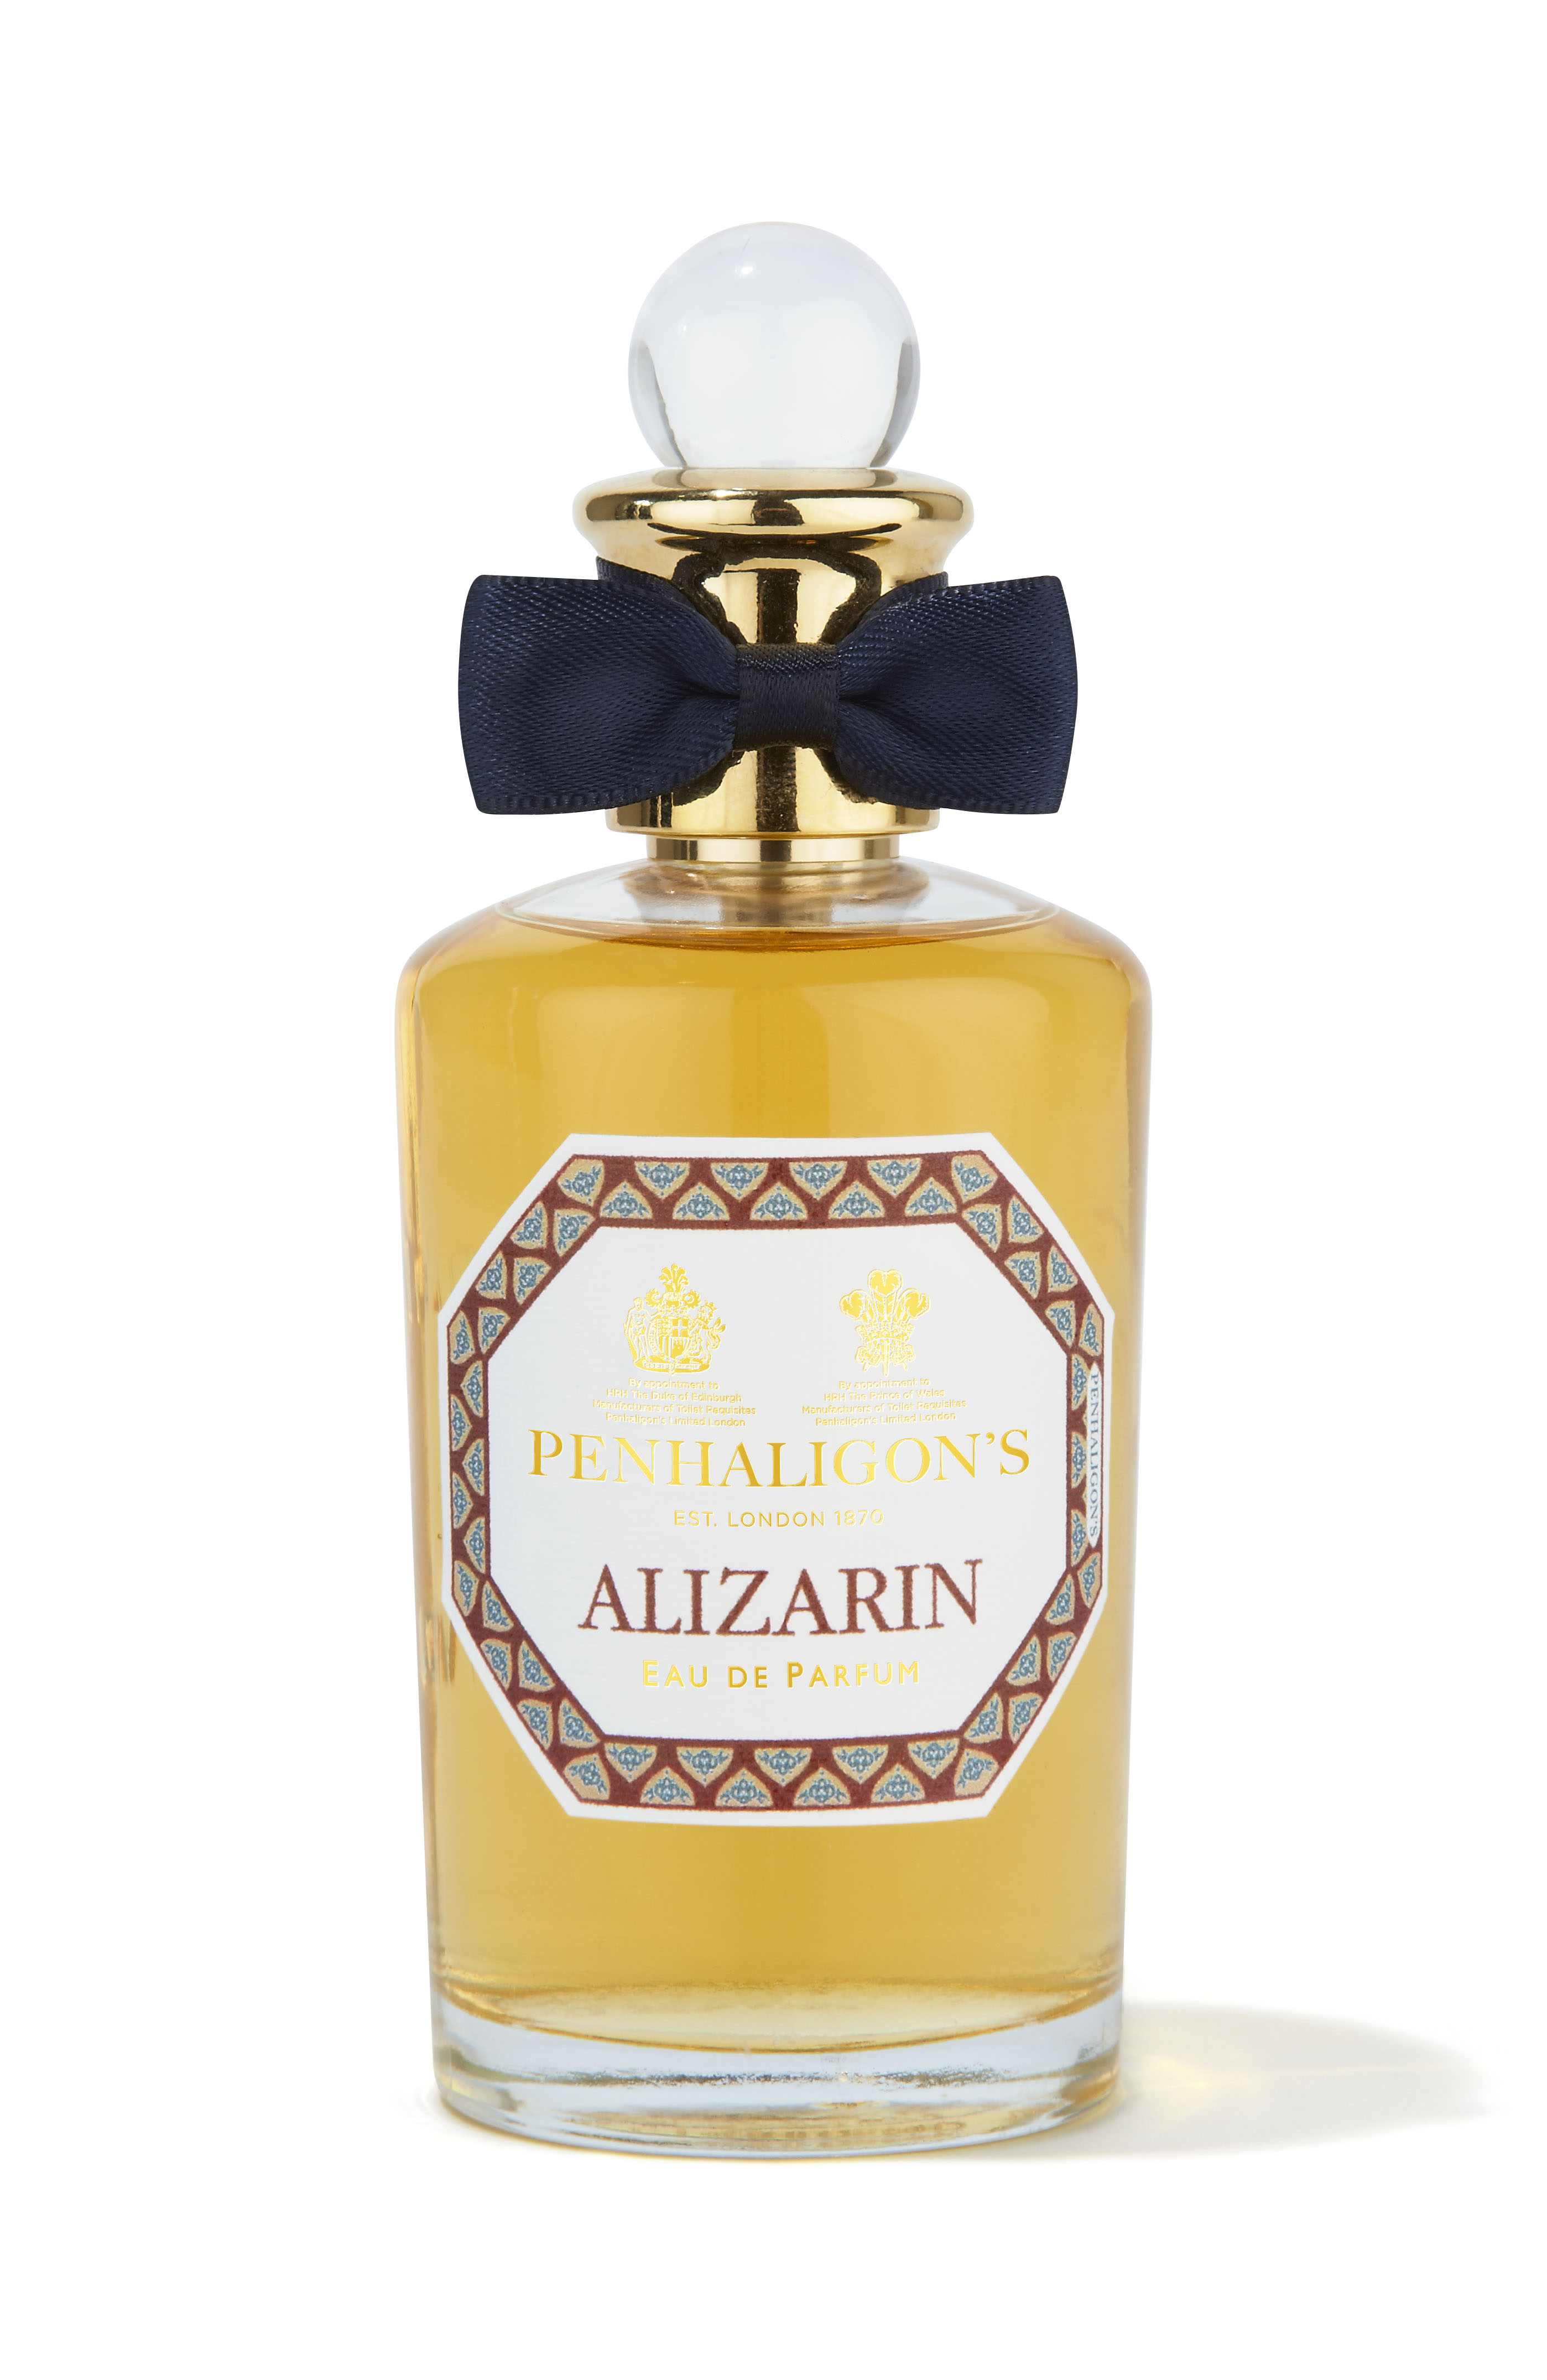 Alizarin Eau de Parfum